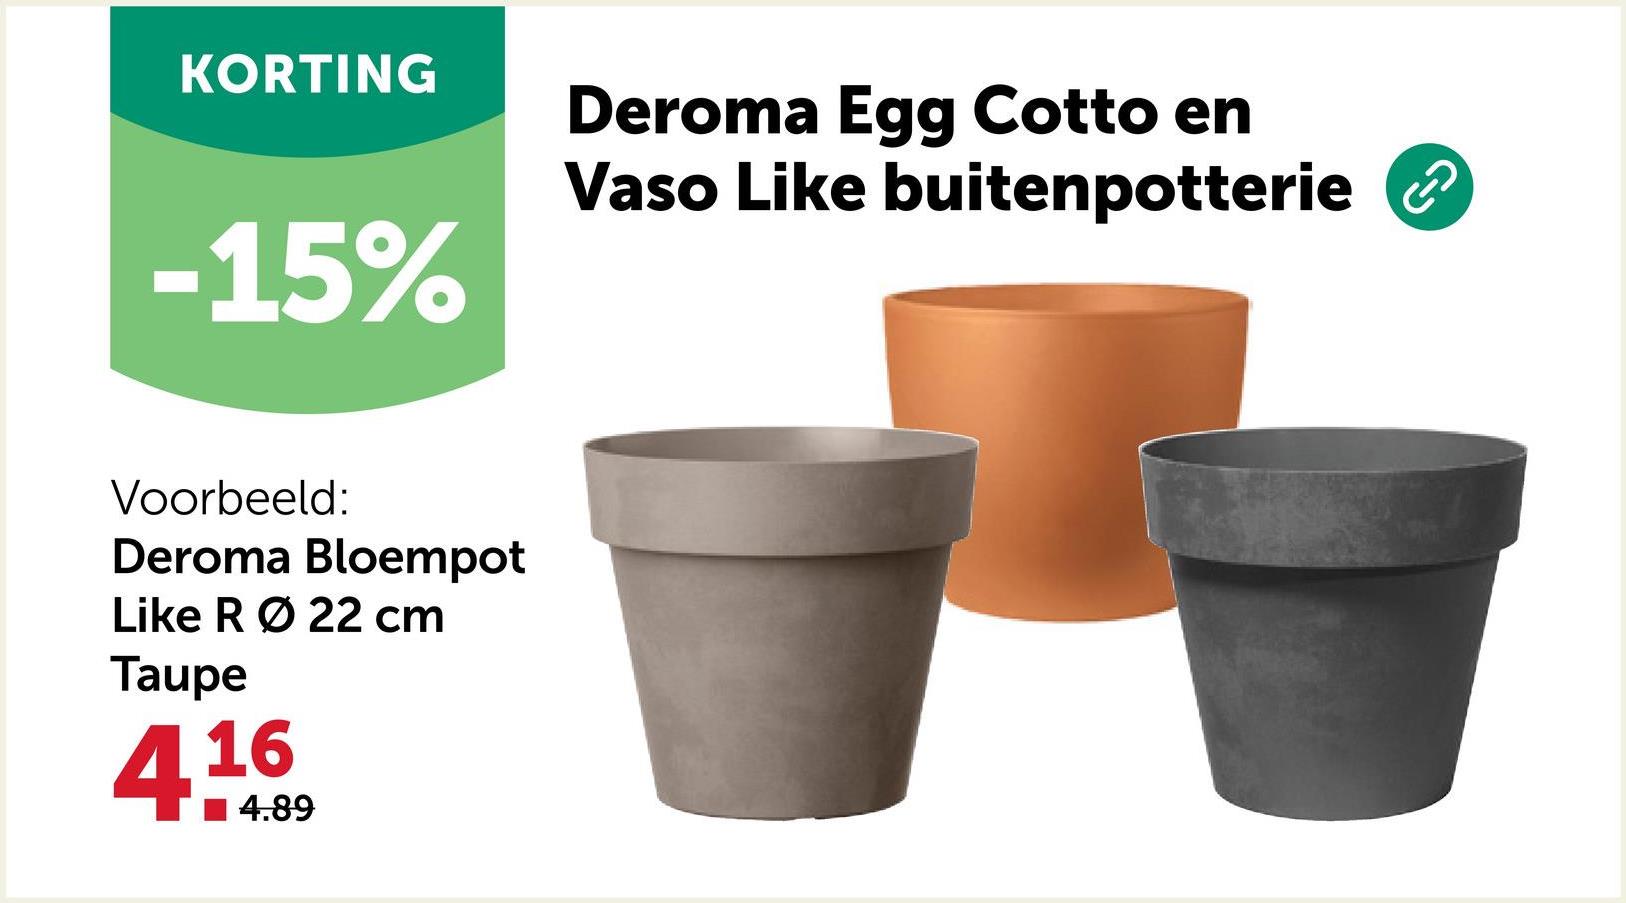 KORTING
-15%
Deroma Egg Cotto en
Vaso Like buitenpotterie ②
Voorbeeld:
Deroma Bloempot
Like RØ 22 cm
Taupe
4.16
4.89